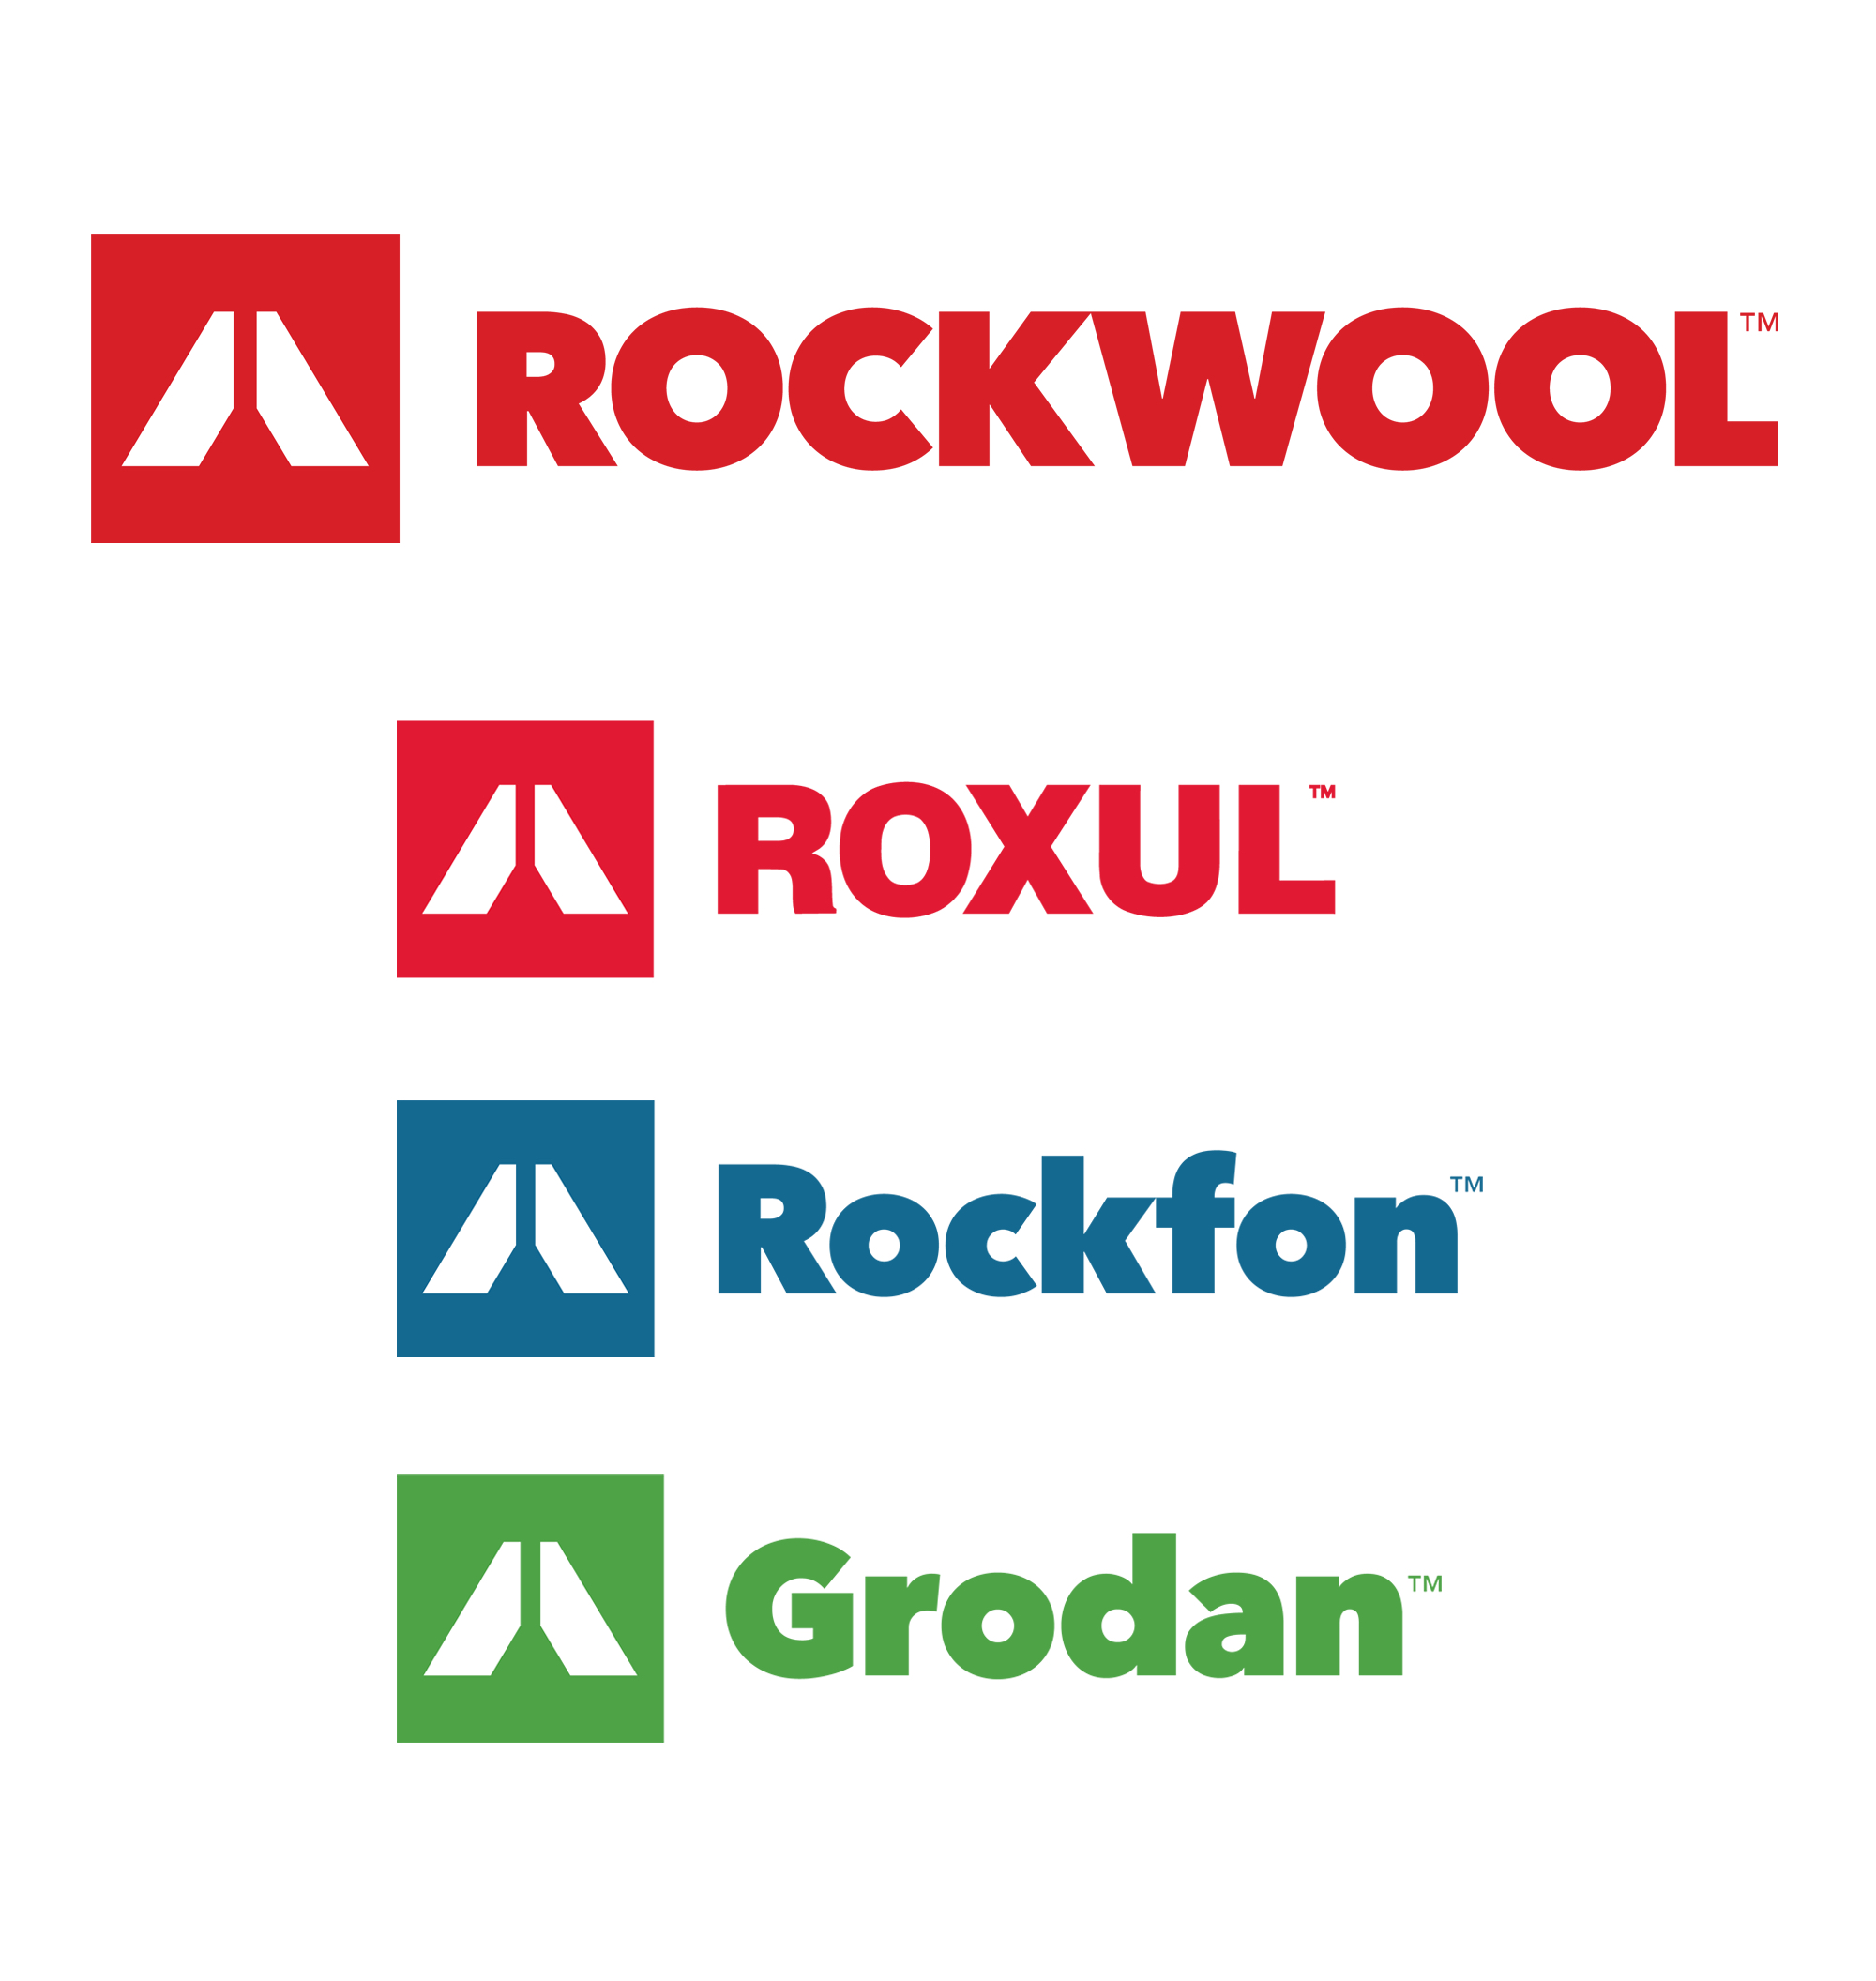 ROCKWOOL Unveils New Global Brand Identity, 2017-04-04